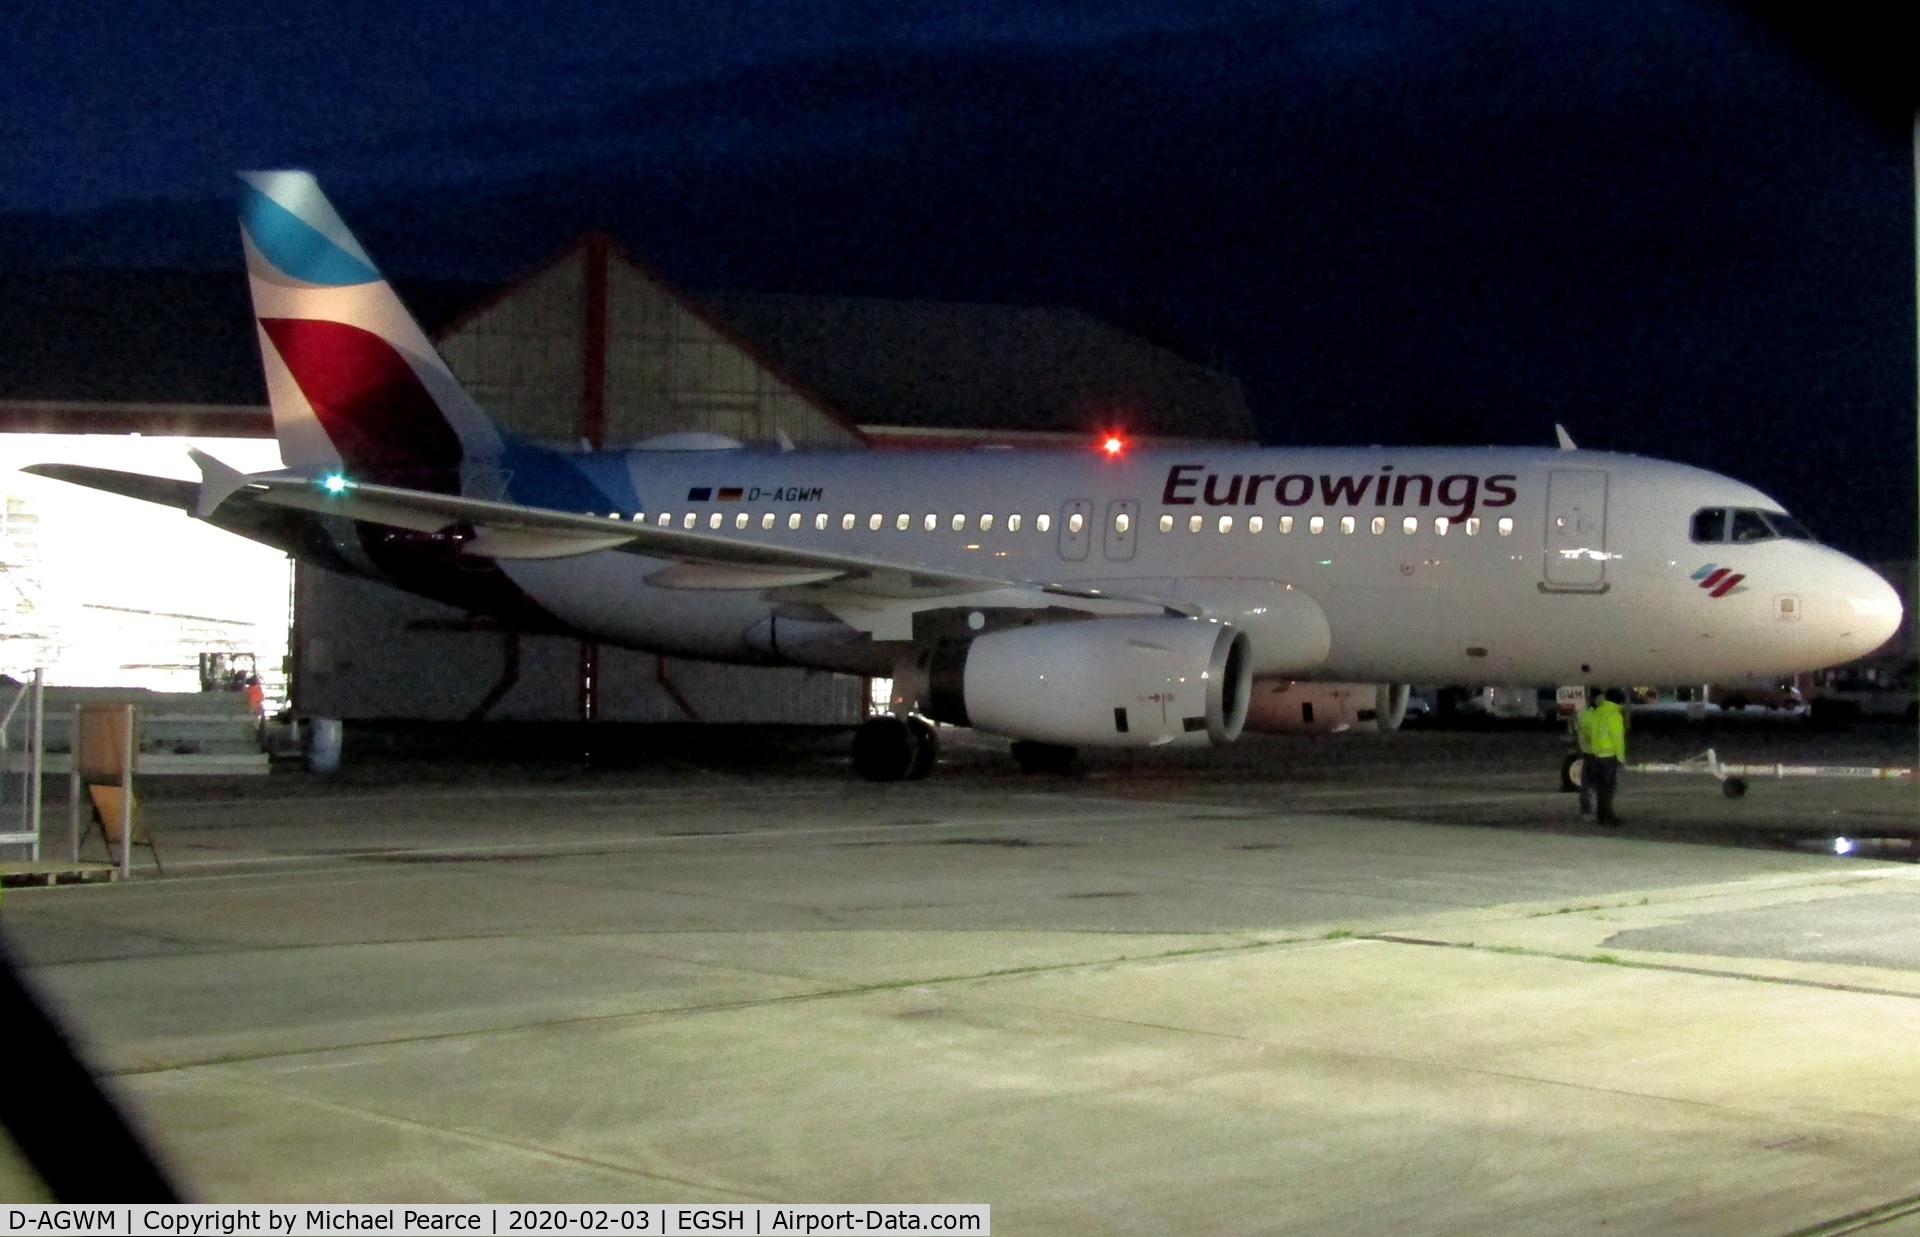 D-AGWM, 2009 Airbus A319-132 C/N 3839, Rolling out of Air Livery Hangar 2 following respray.